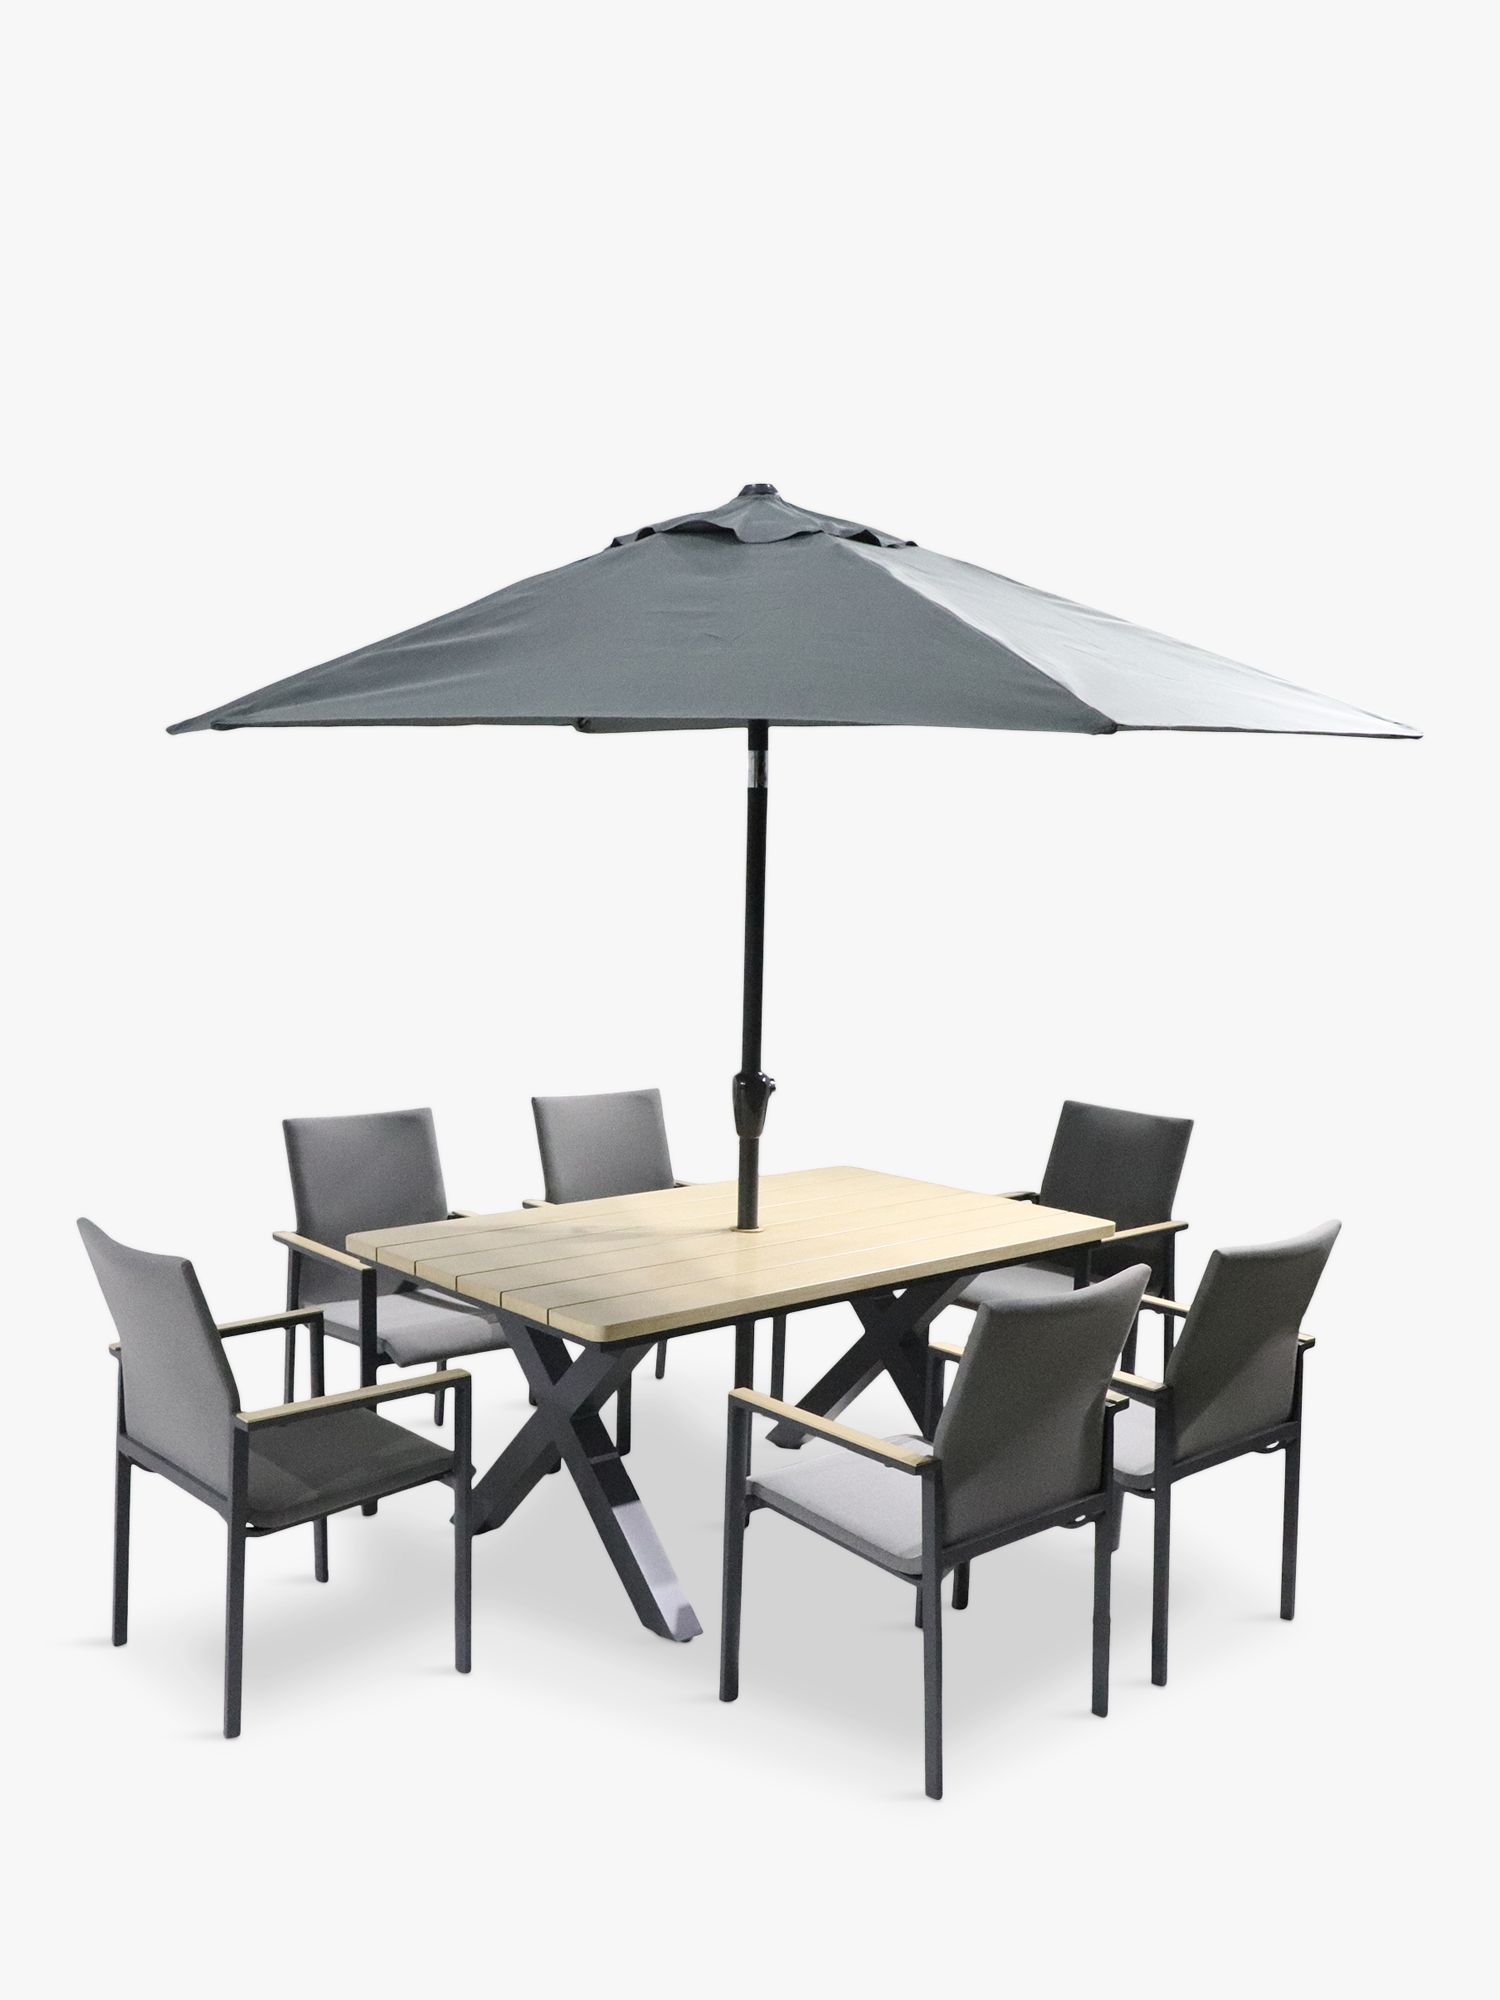 LG Outdoor Venice 6-Seater Garden Dining Set, Grey